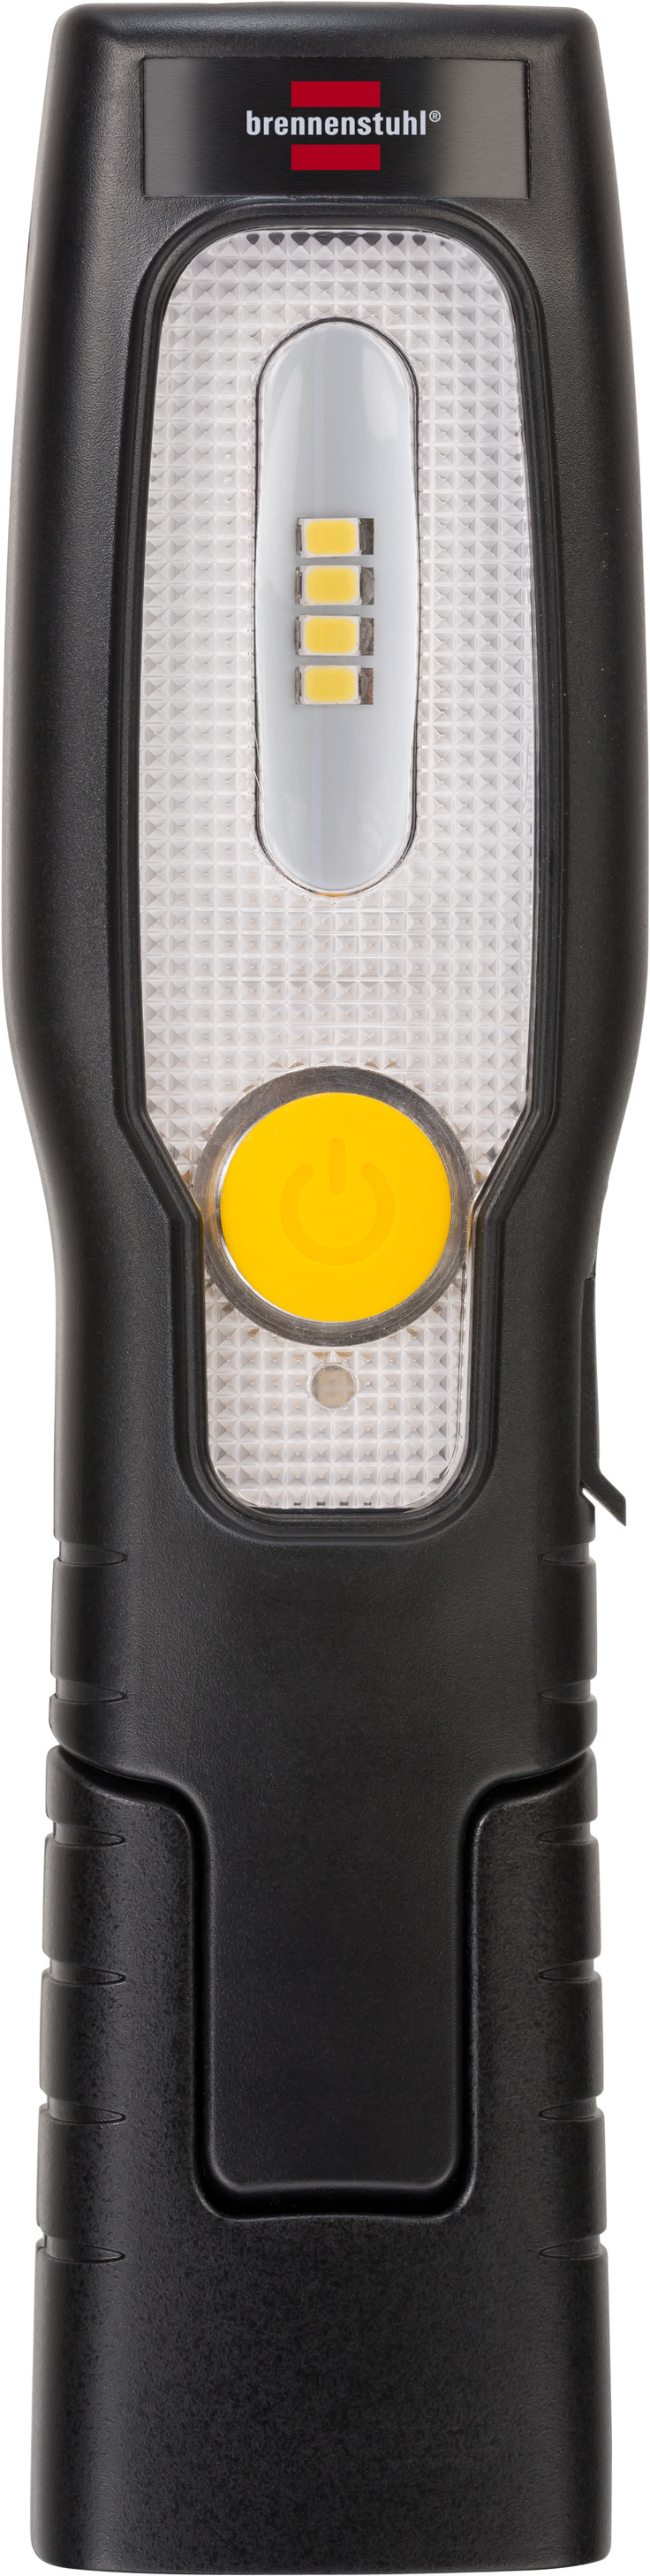 LED Akku-Handleuchte HL 200 knickbar | 250+70lm, brennenstuhl® A